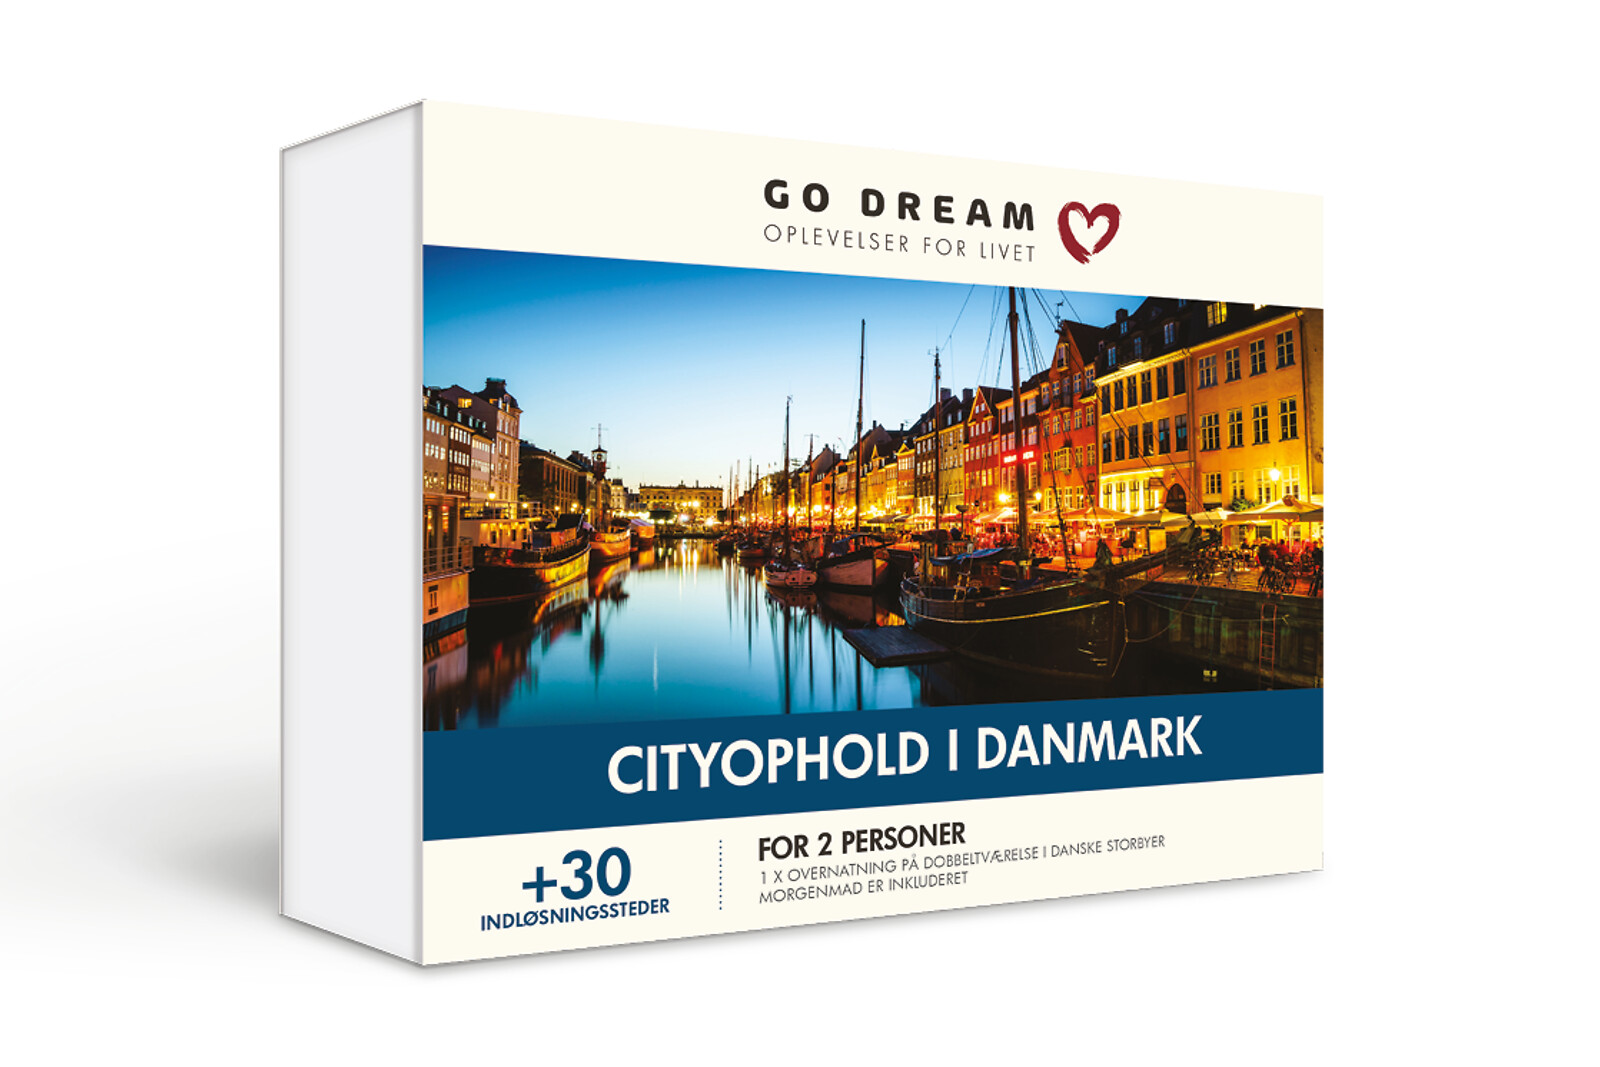 Se Cityophold I Danmark - Rejse og Ophold - GO DREAM hos GO DREAM DK